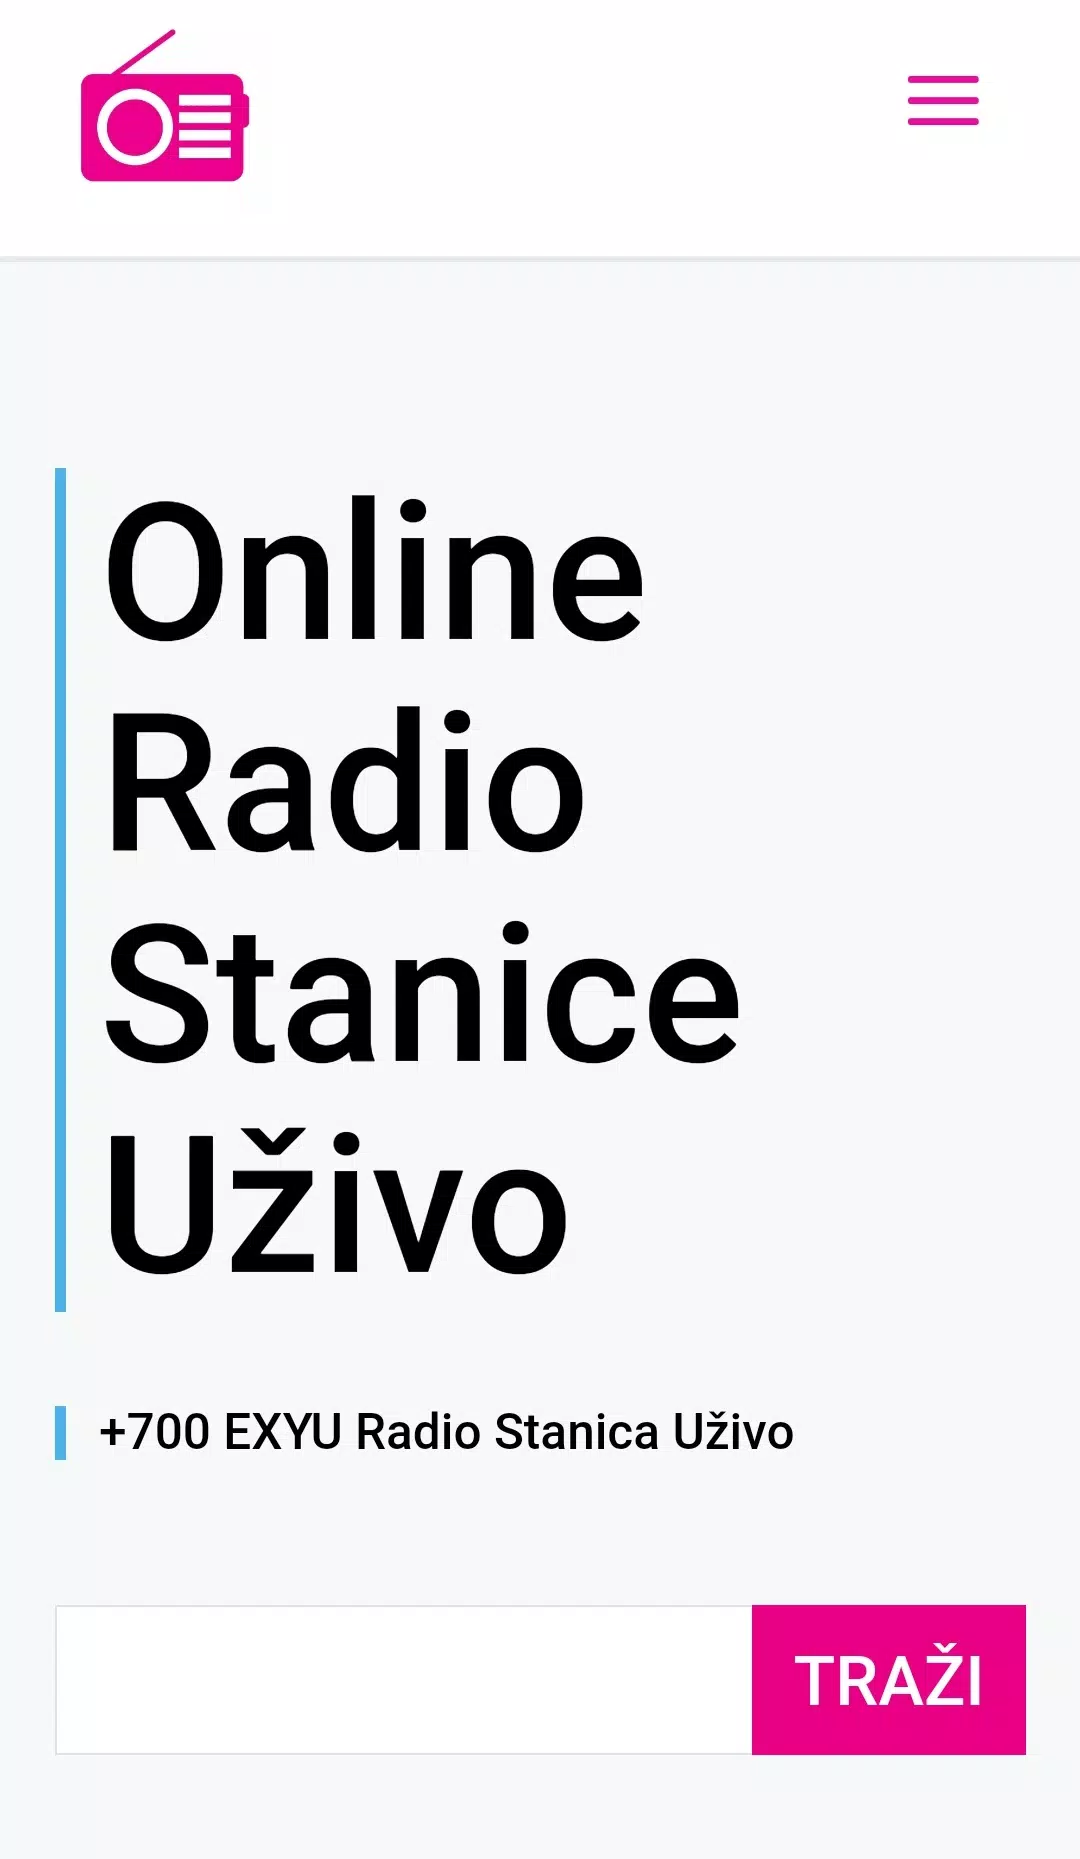 RADIOSTANICA.BA - Radio stanice BiH uživo online! for Android - APK Download